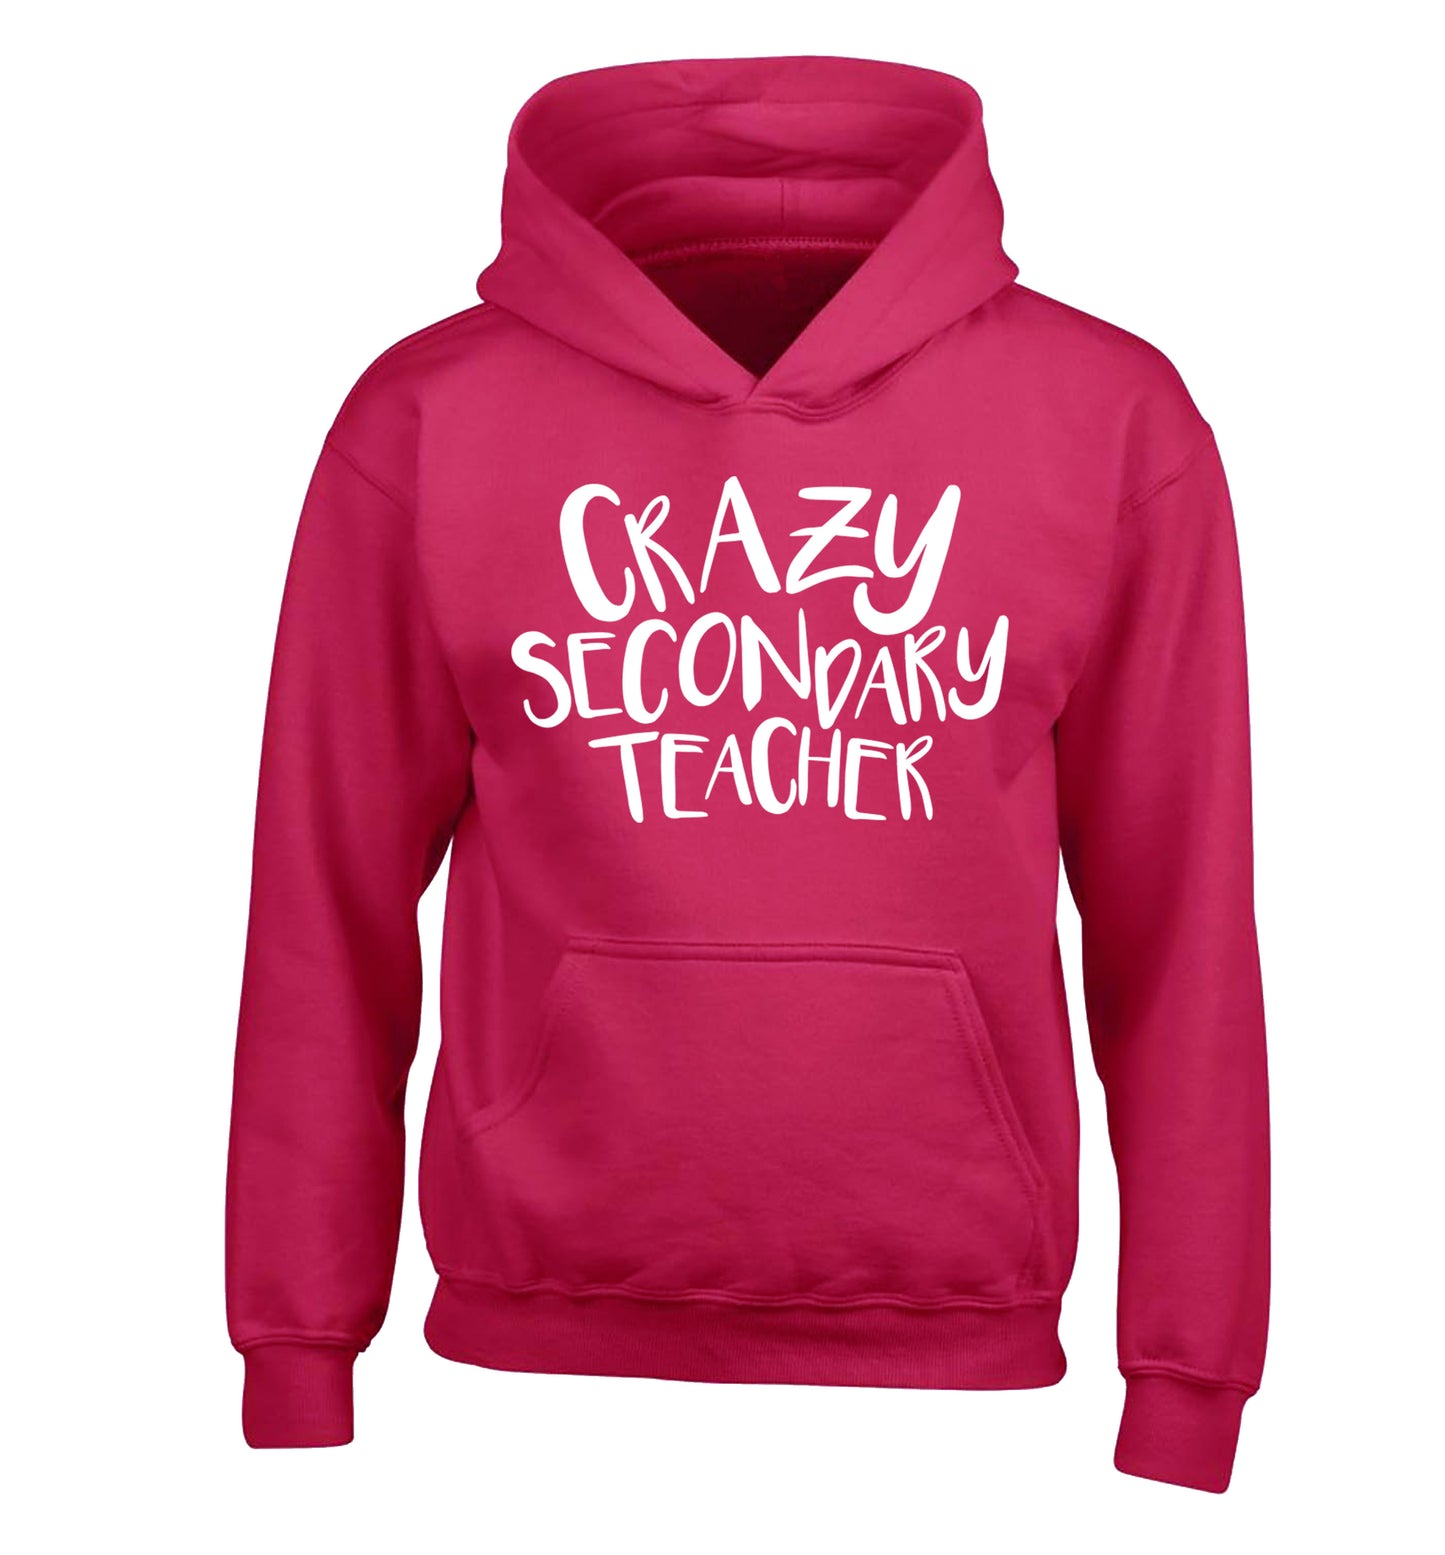 Crazy secondary teacher children's pink hoodie 12-13 Years